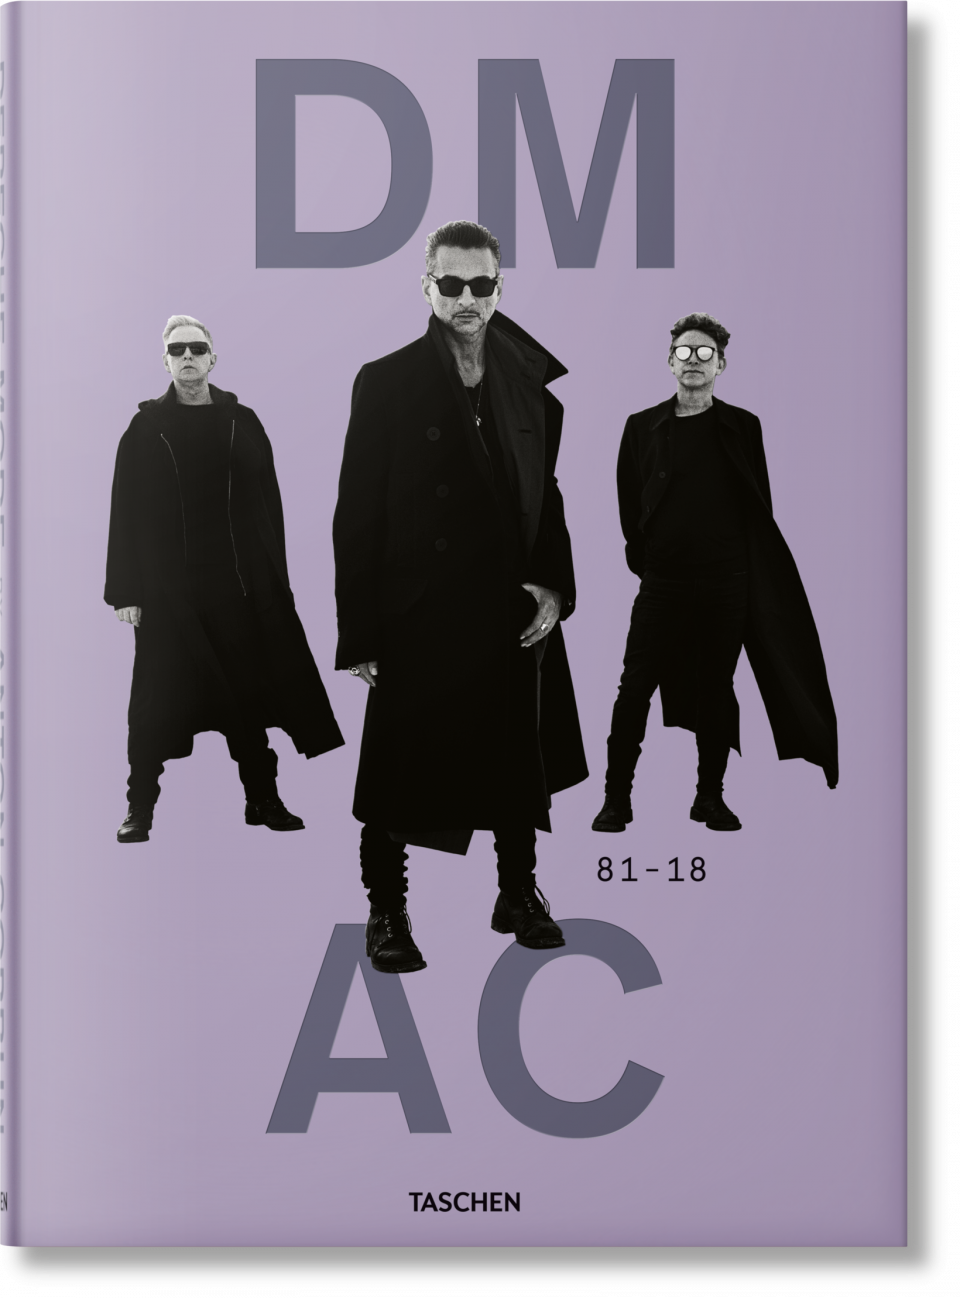 Depeche Mode by Anton Corbijn. XL